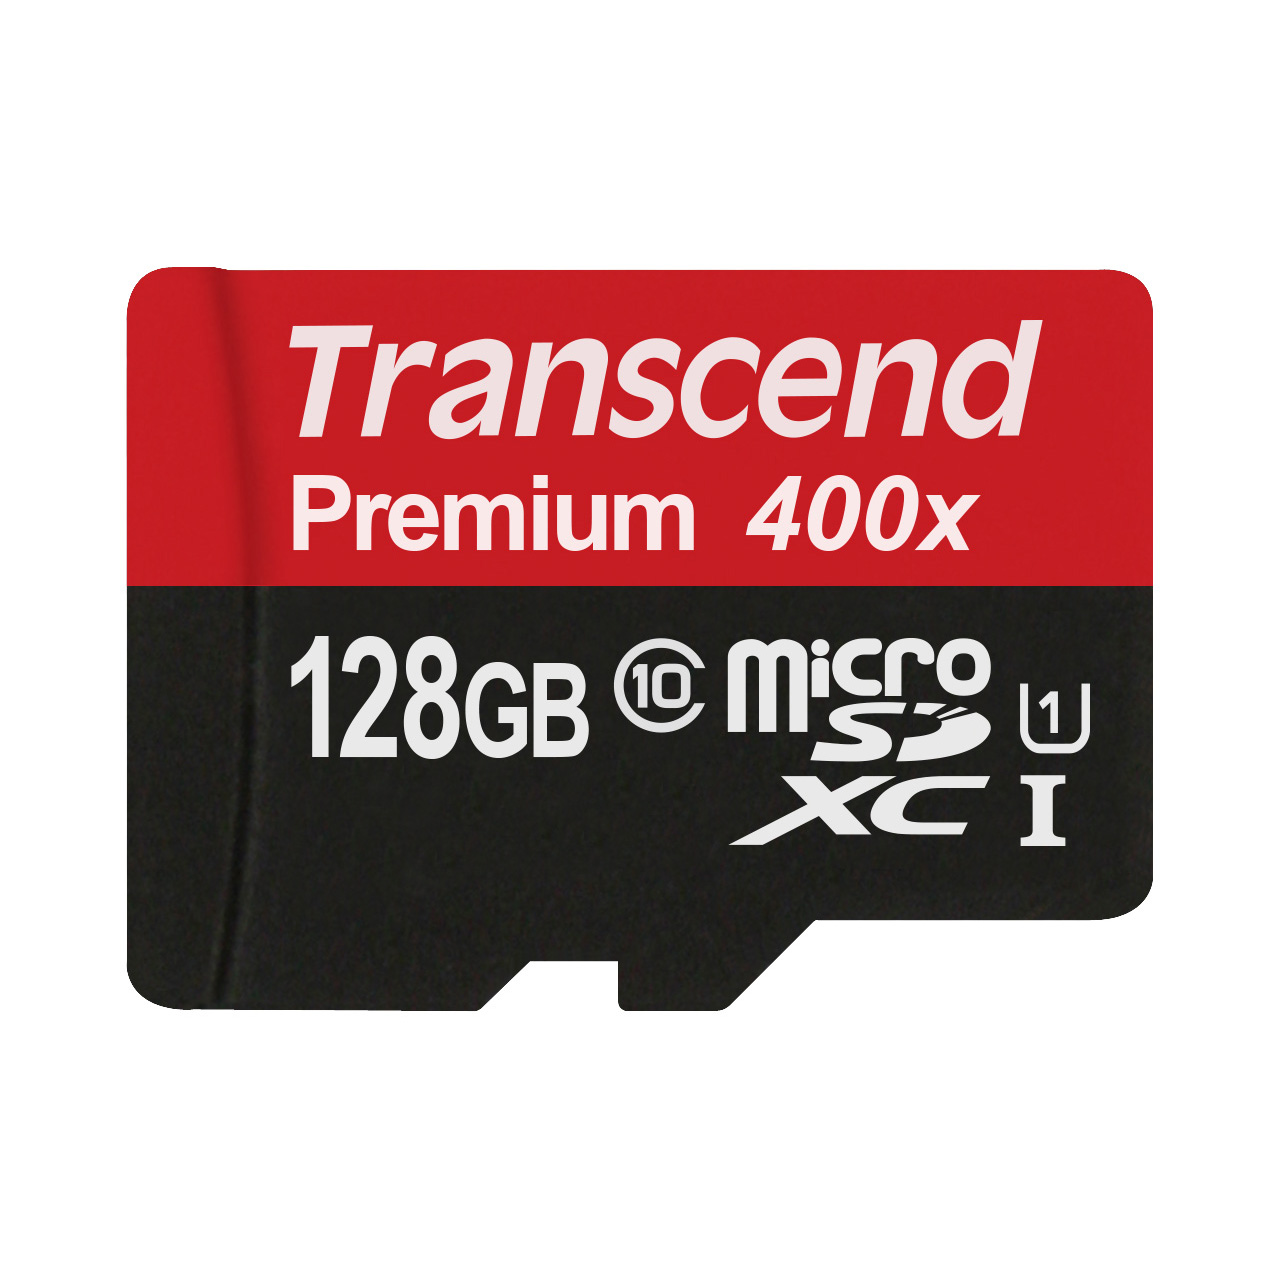 Transcend microSDXCJ[h 128GB Class10 UHS-1Ή 400x SDJ[hϊA_v^t TS128GUSDU1 TS128GUSDU1